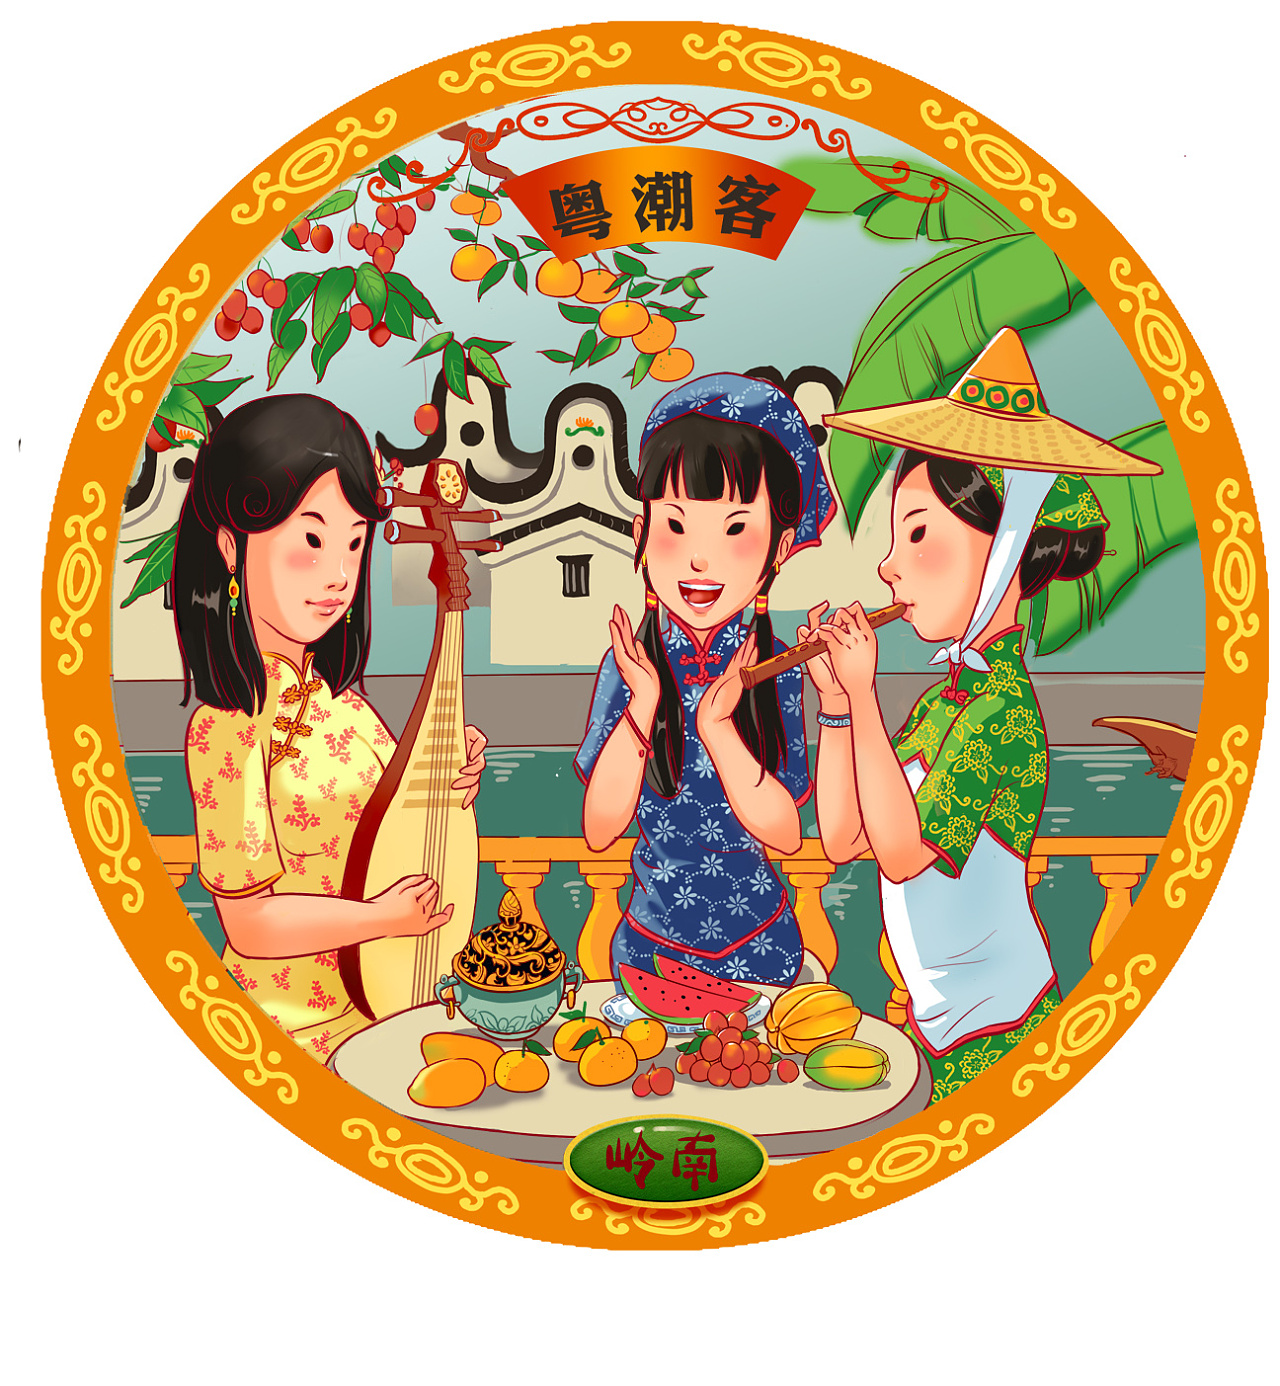 culture)为广州某广告公司创作的一套推广岭南文化的主题插画